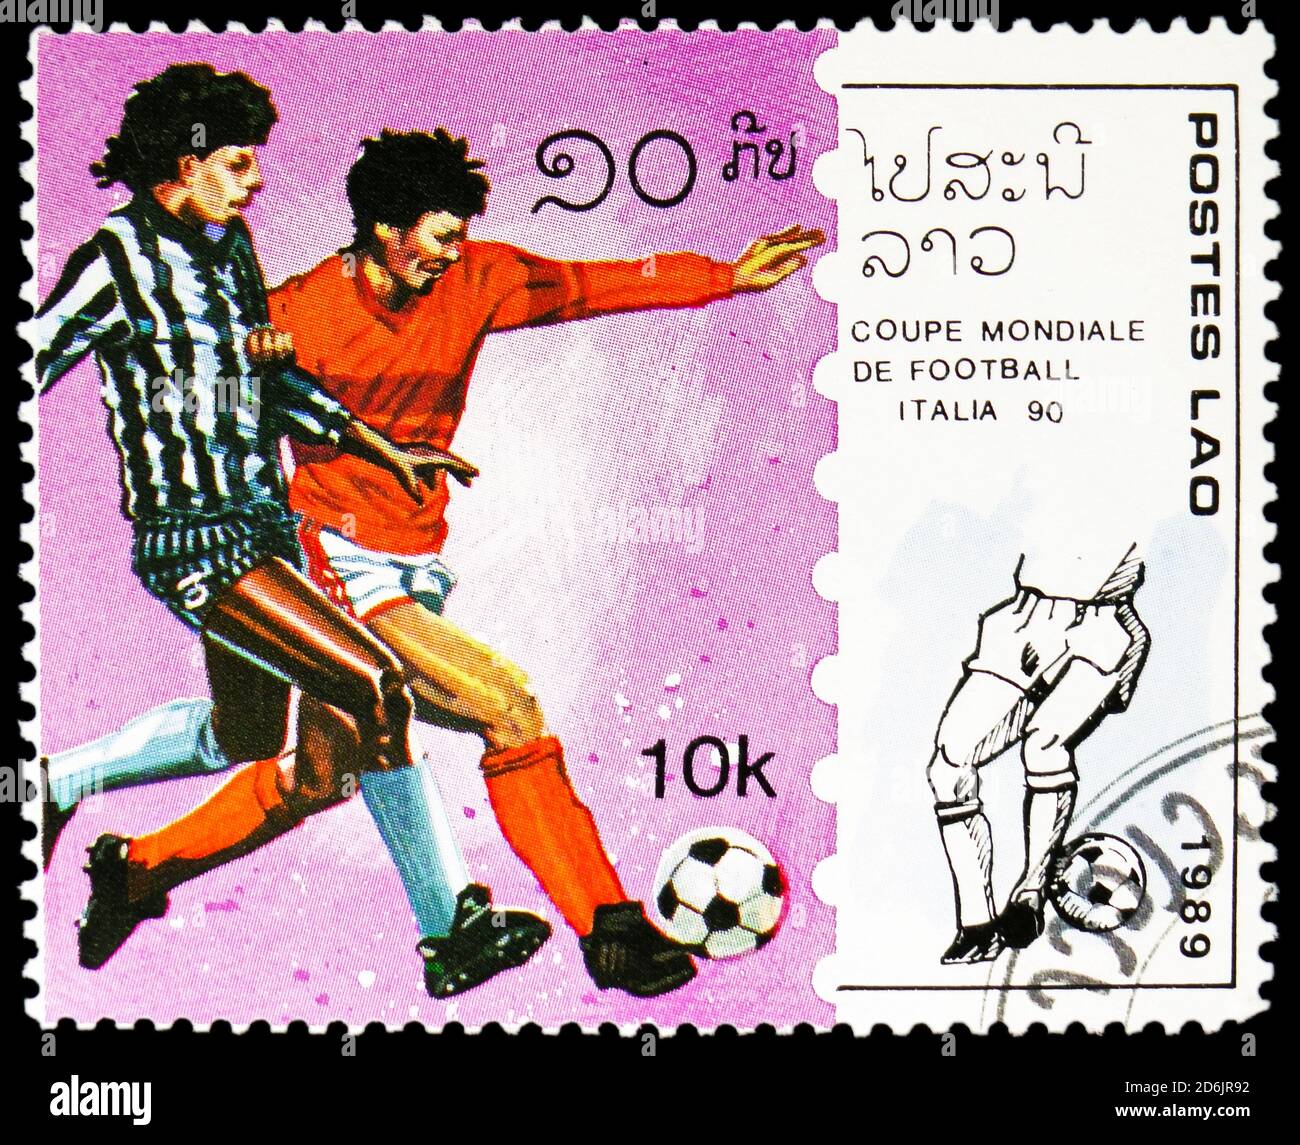 MOSKAU, RUSSLAND - 10. SEPTEMBER 2020: Briefmarke gedruckt in Laos zeigt Fußballer, FIFA Fußball-Weltmeisterschaft 1990, Italien Serie, um 19 Stockfoto